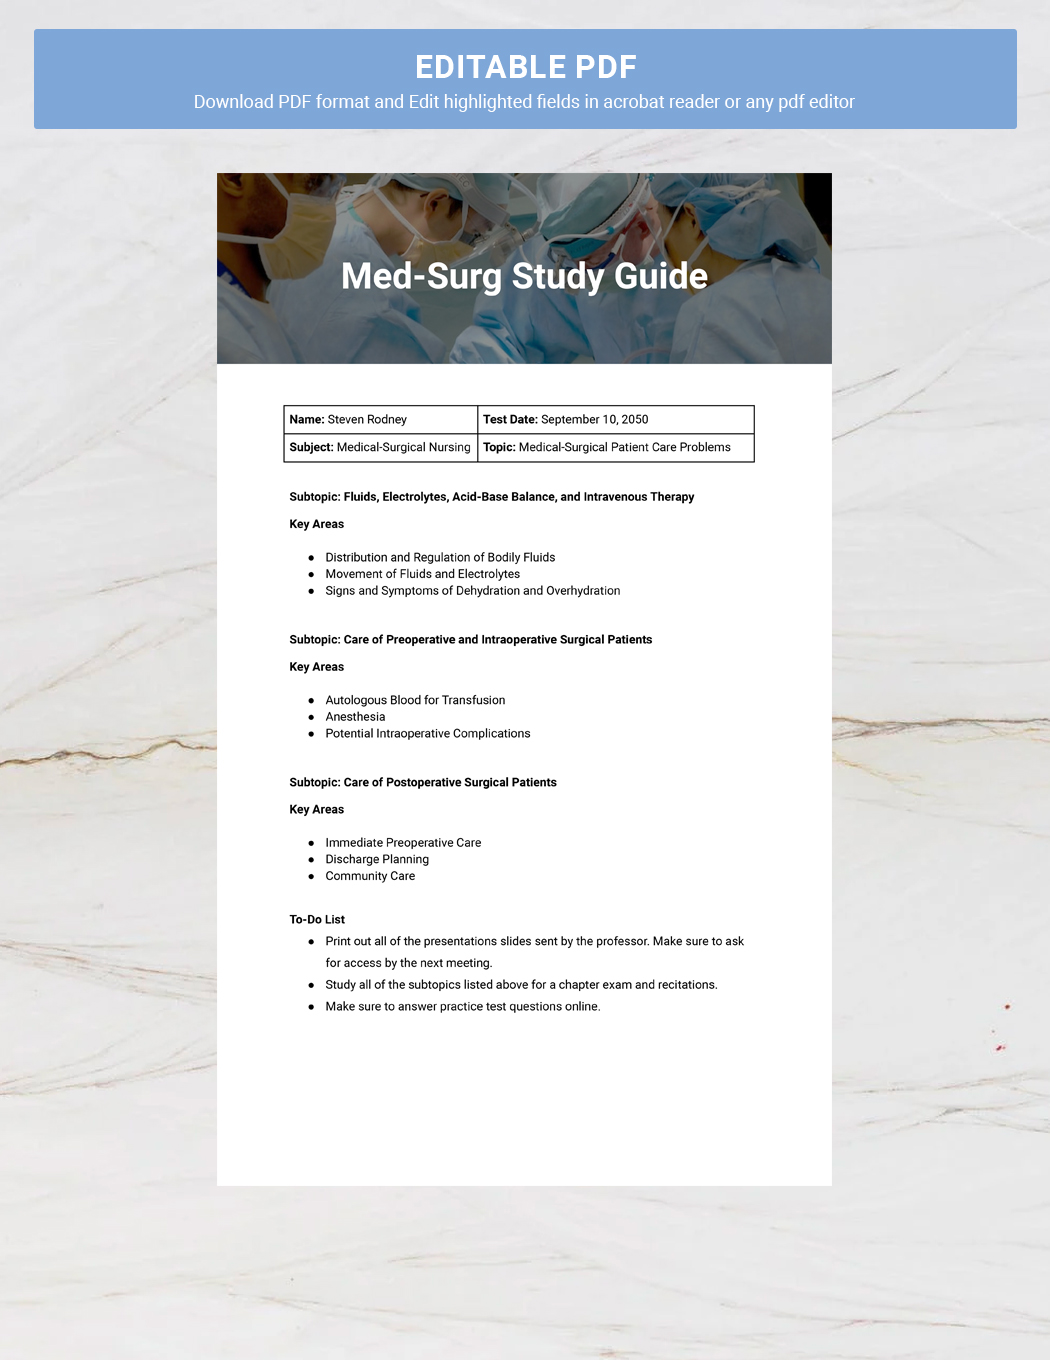 MedSurg Study Guide Template Download in Word, Google Docs, Apple